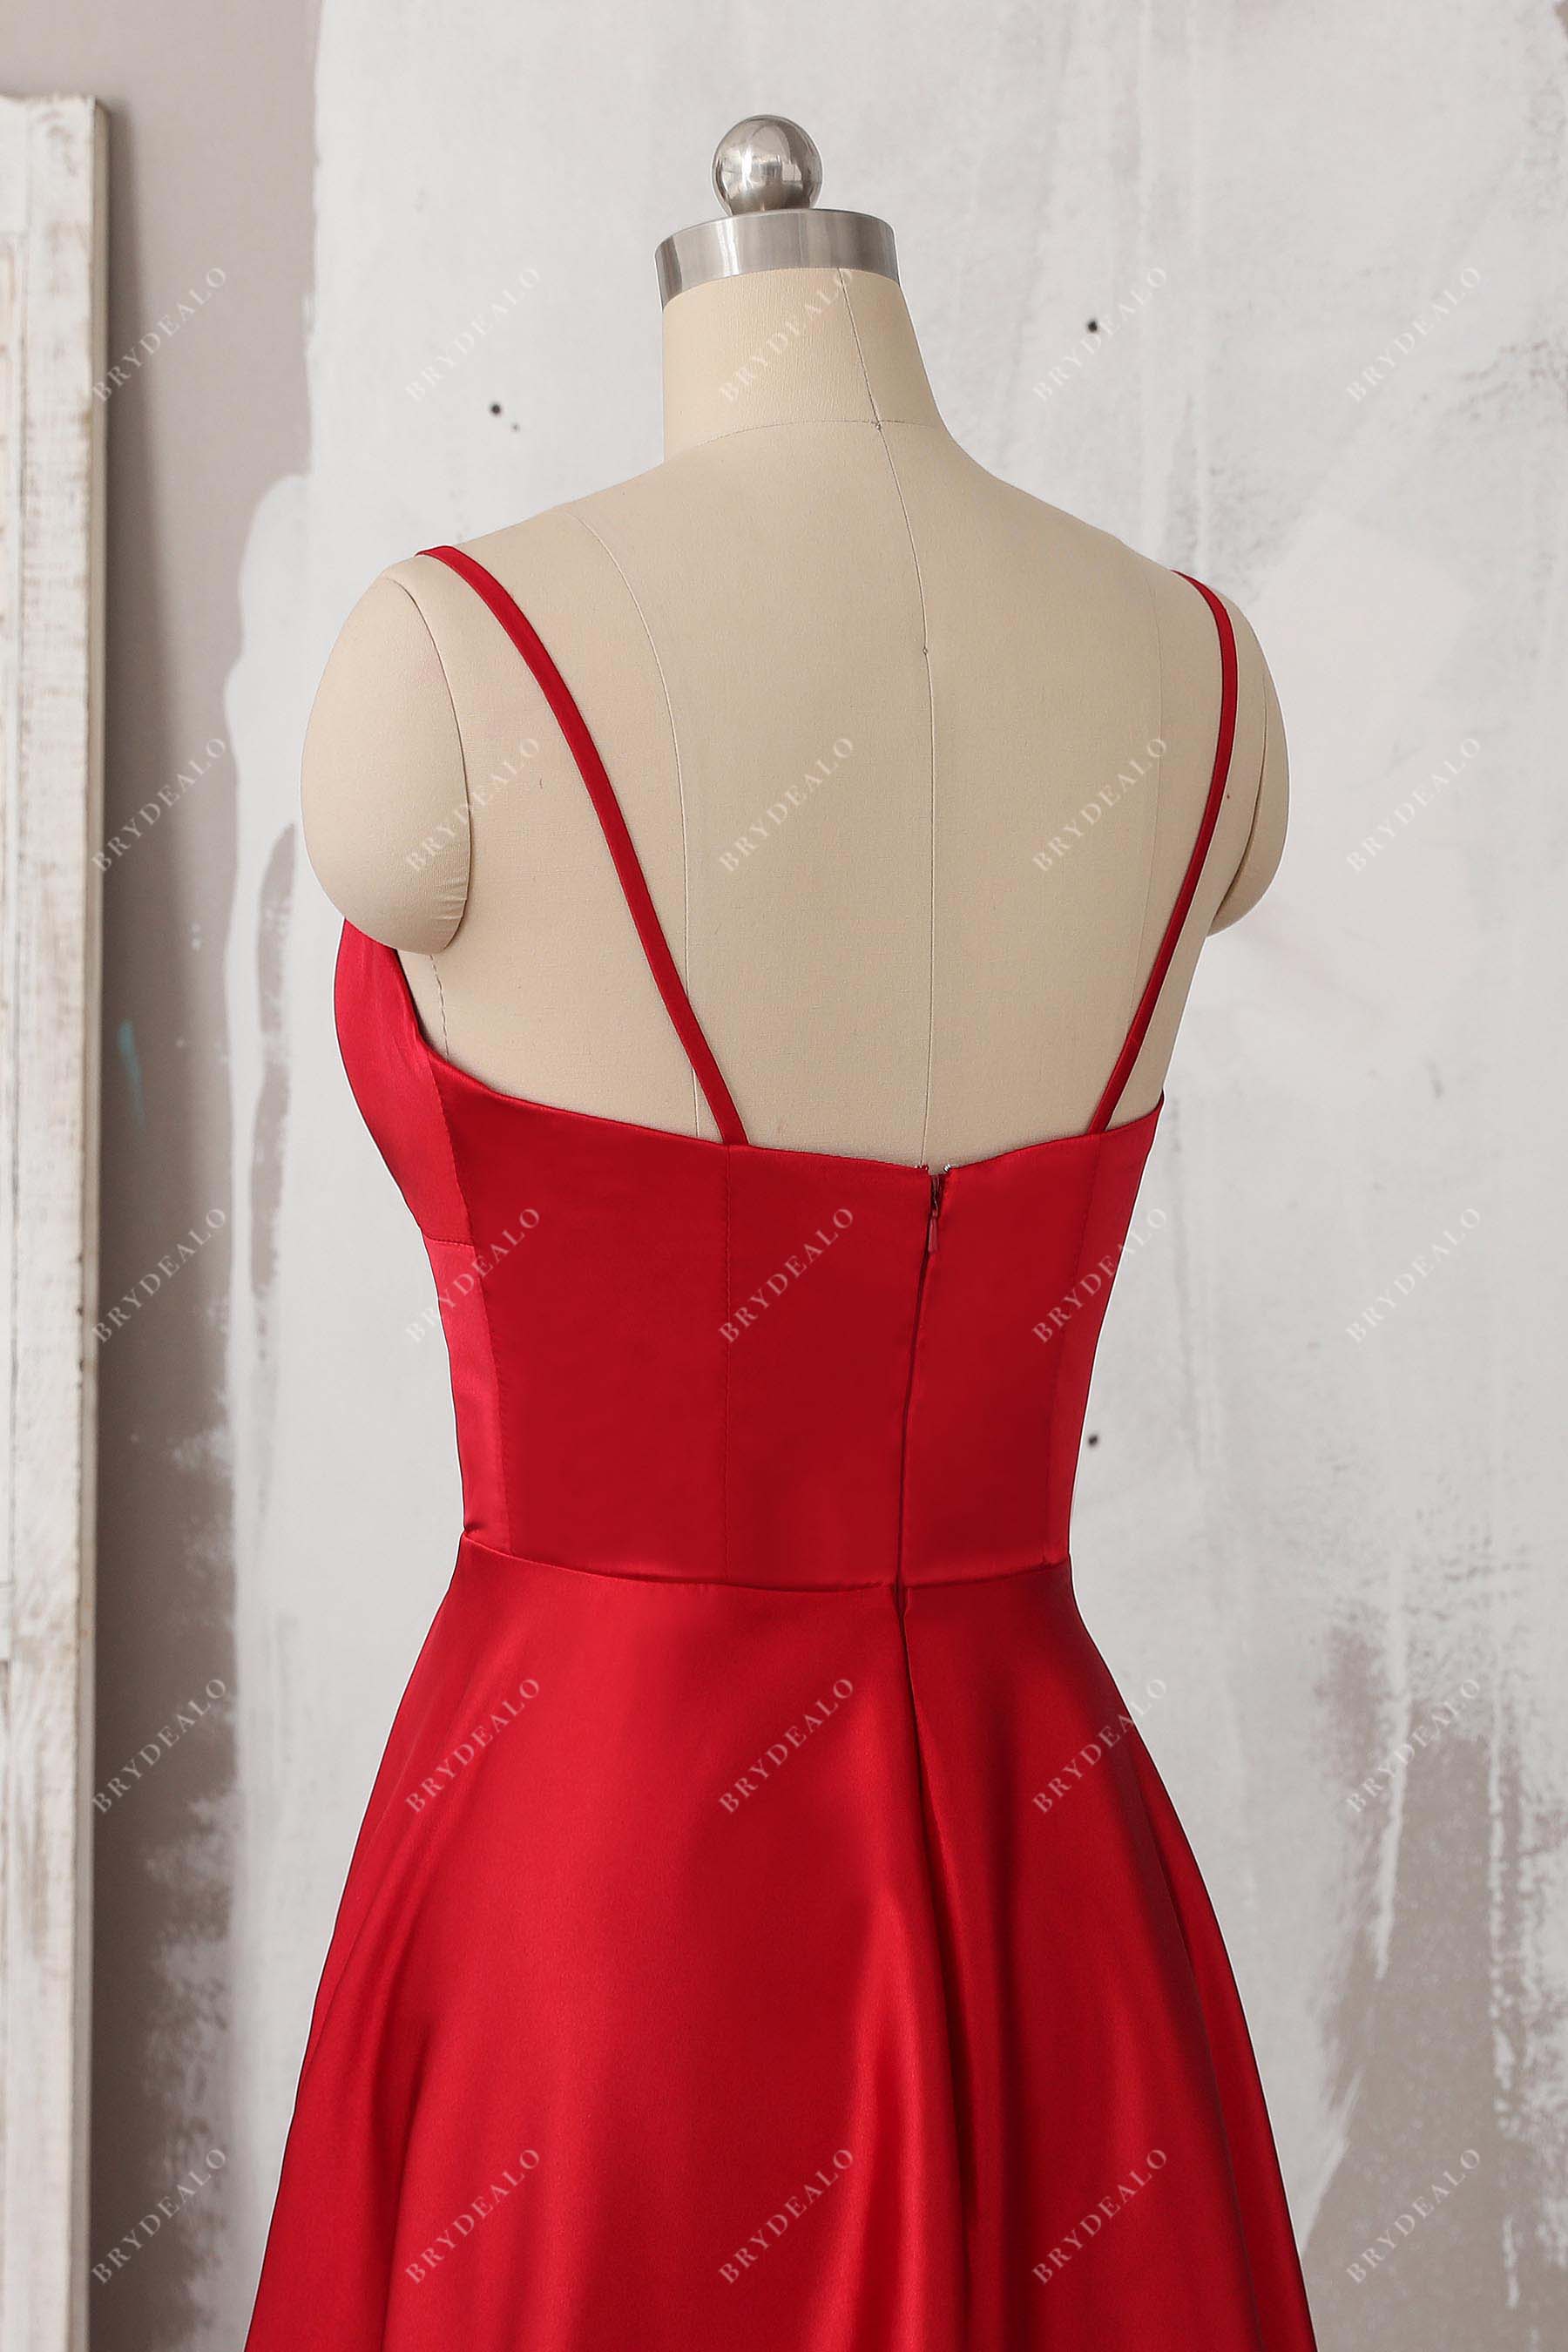 red spaghetti straps dress